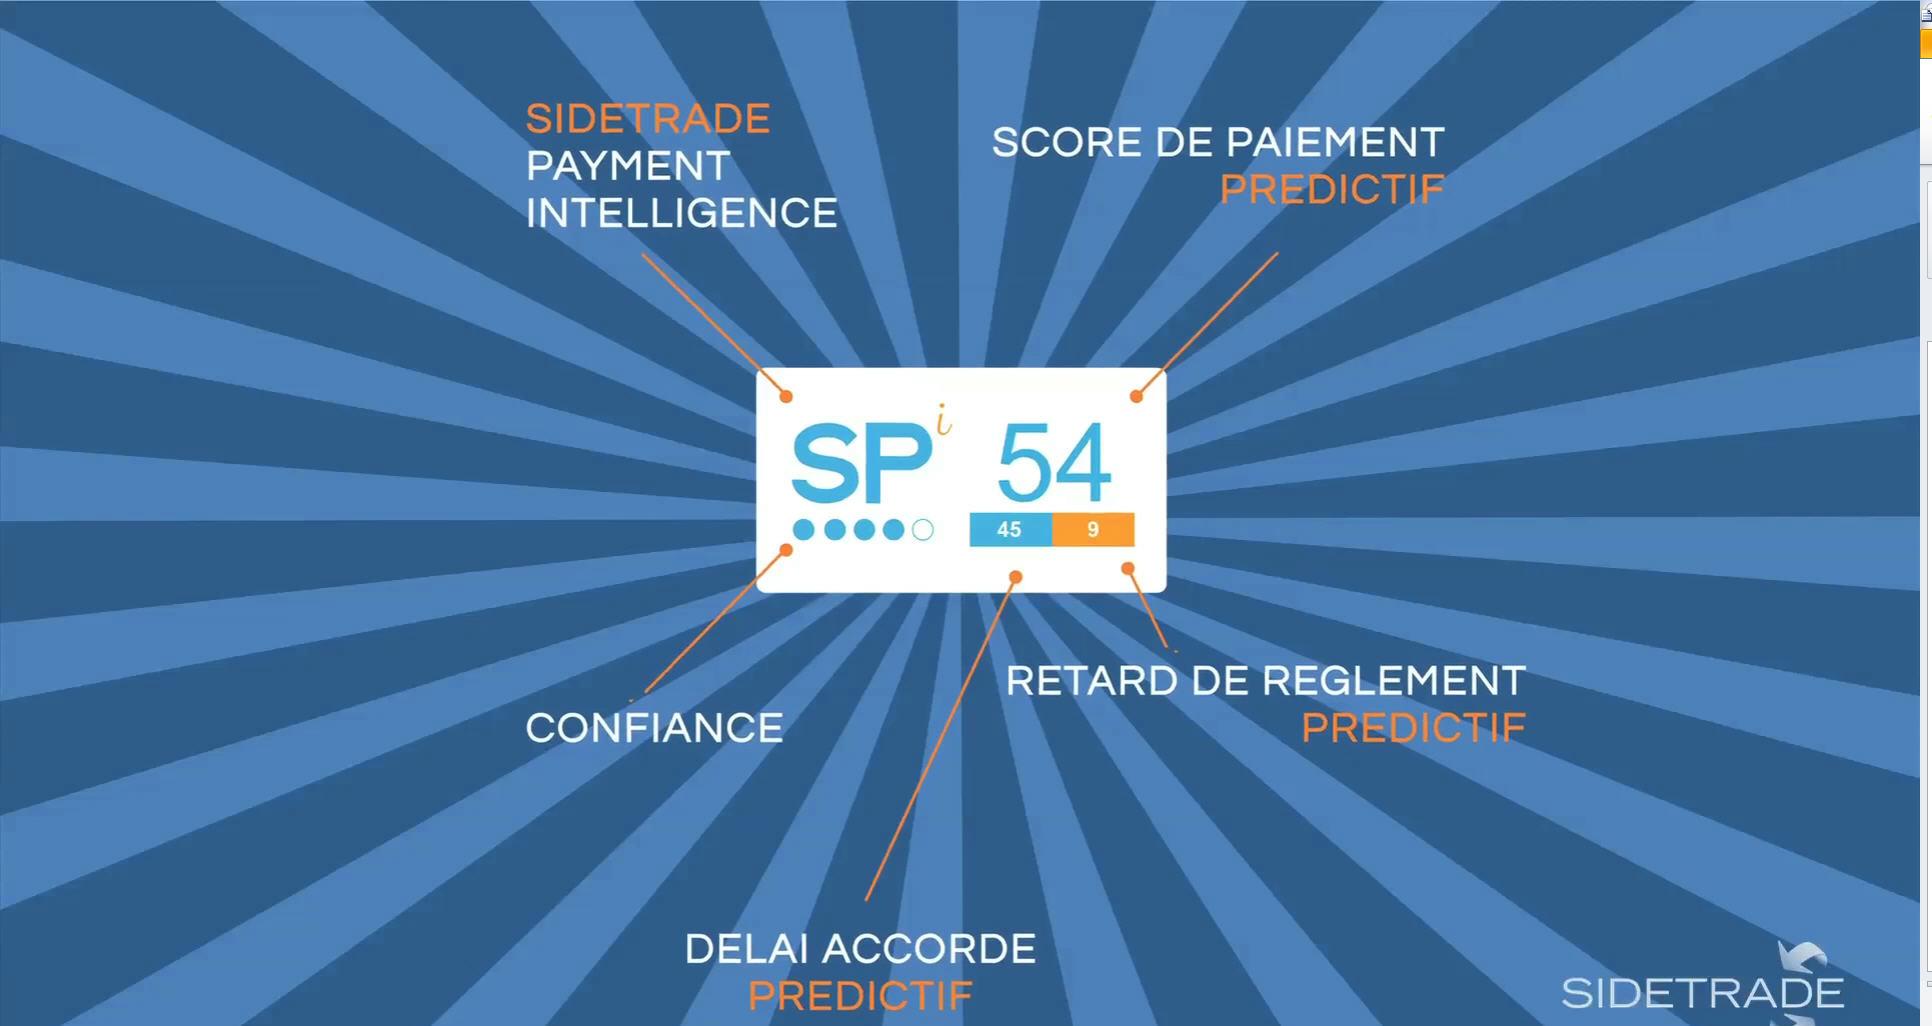 Sidetrade Sales & Marketing-Sidetrade Payment Intelligence - screen shot  7